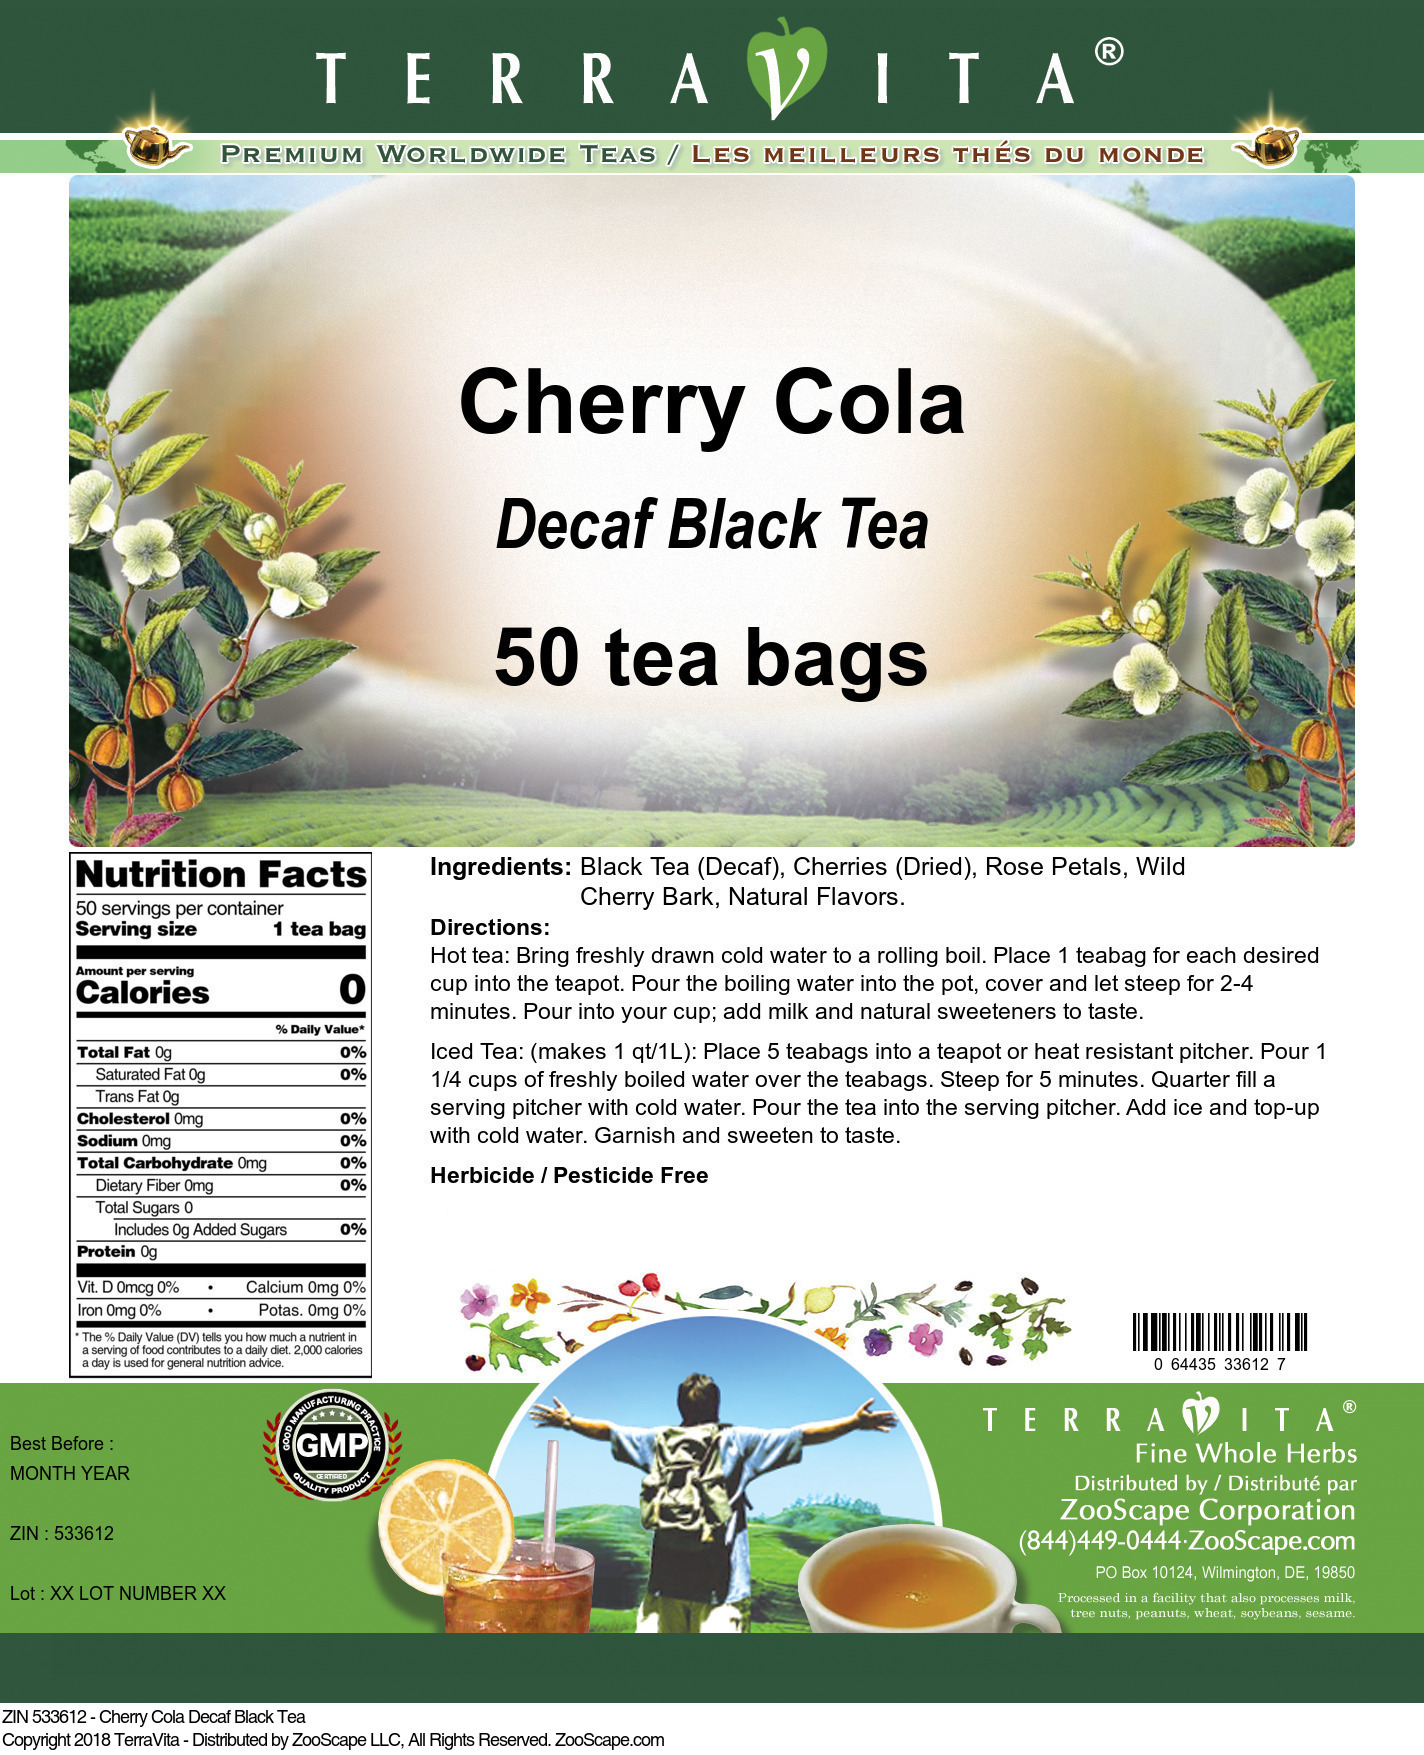 Cherry Cola Decaf Black Tea - Label